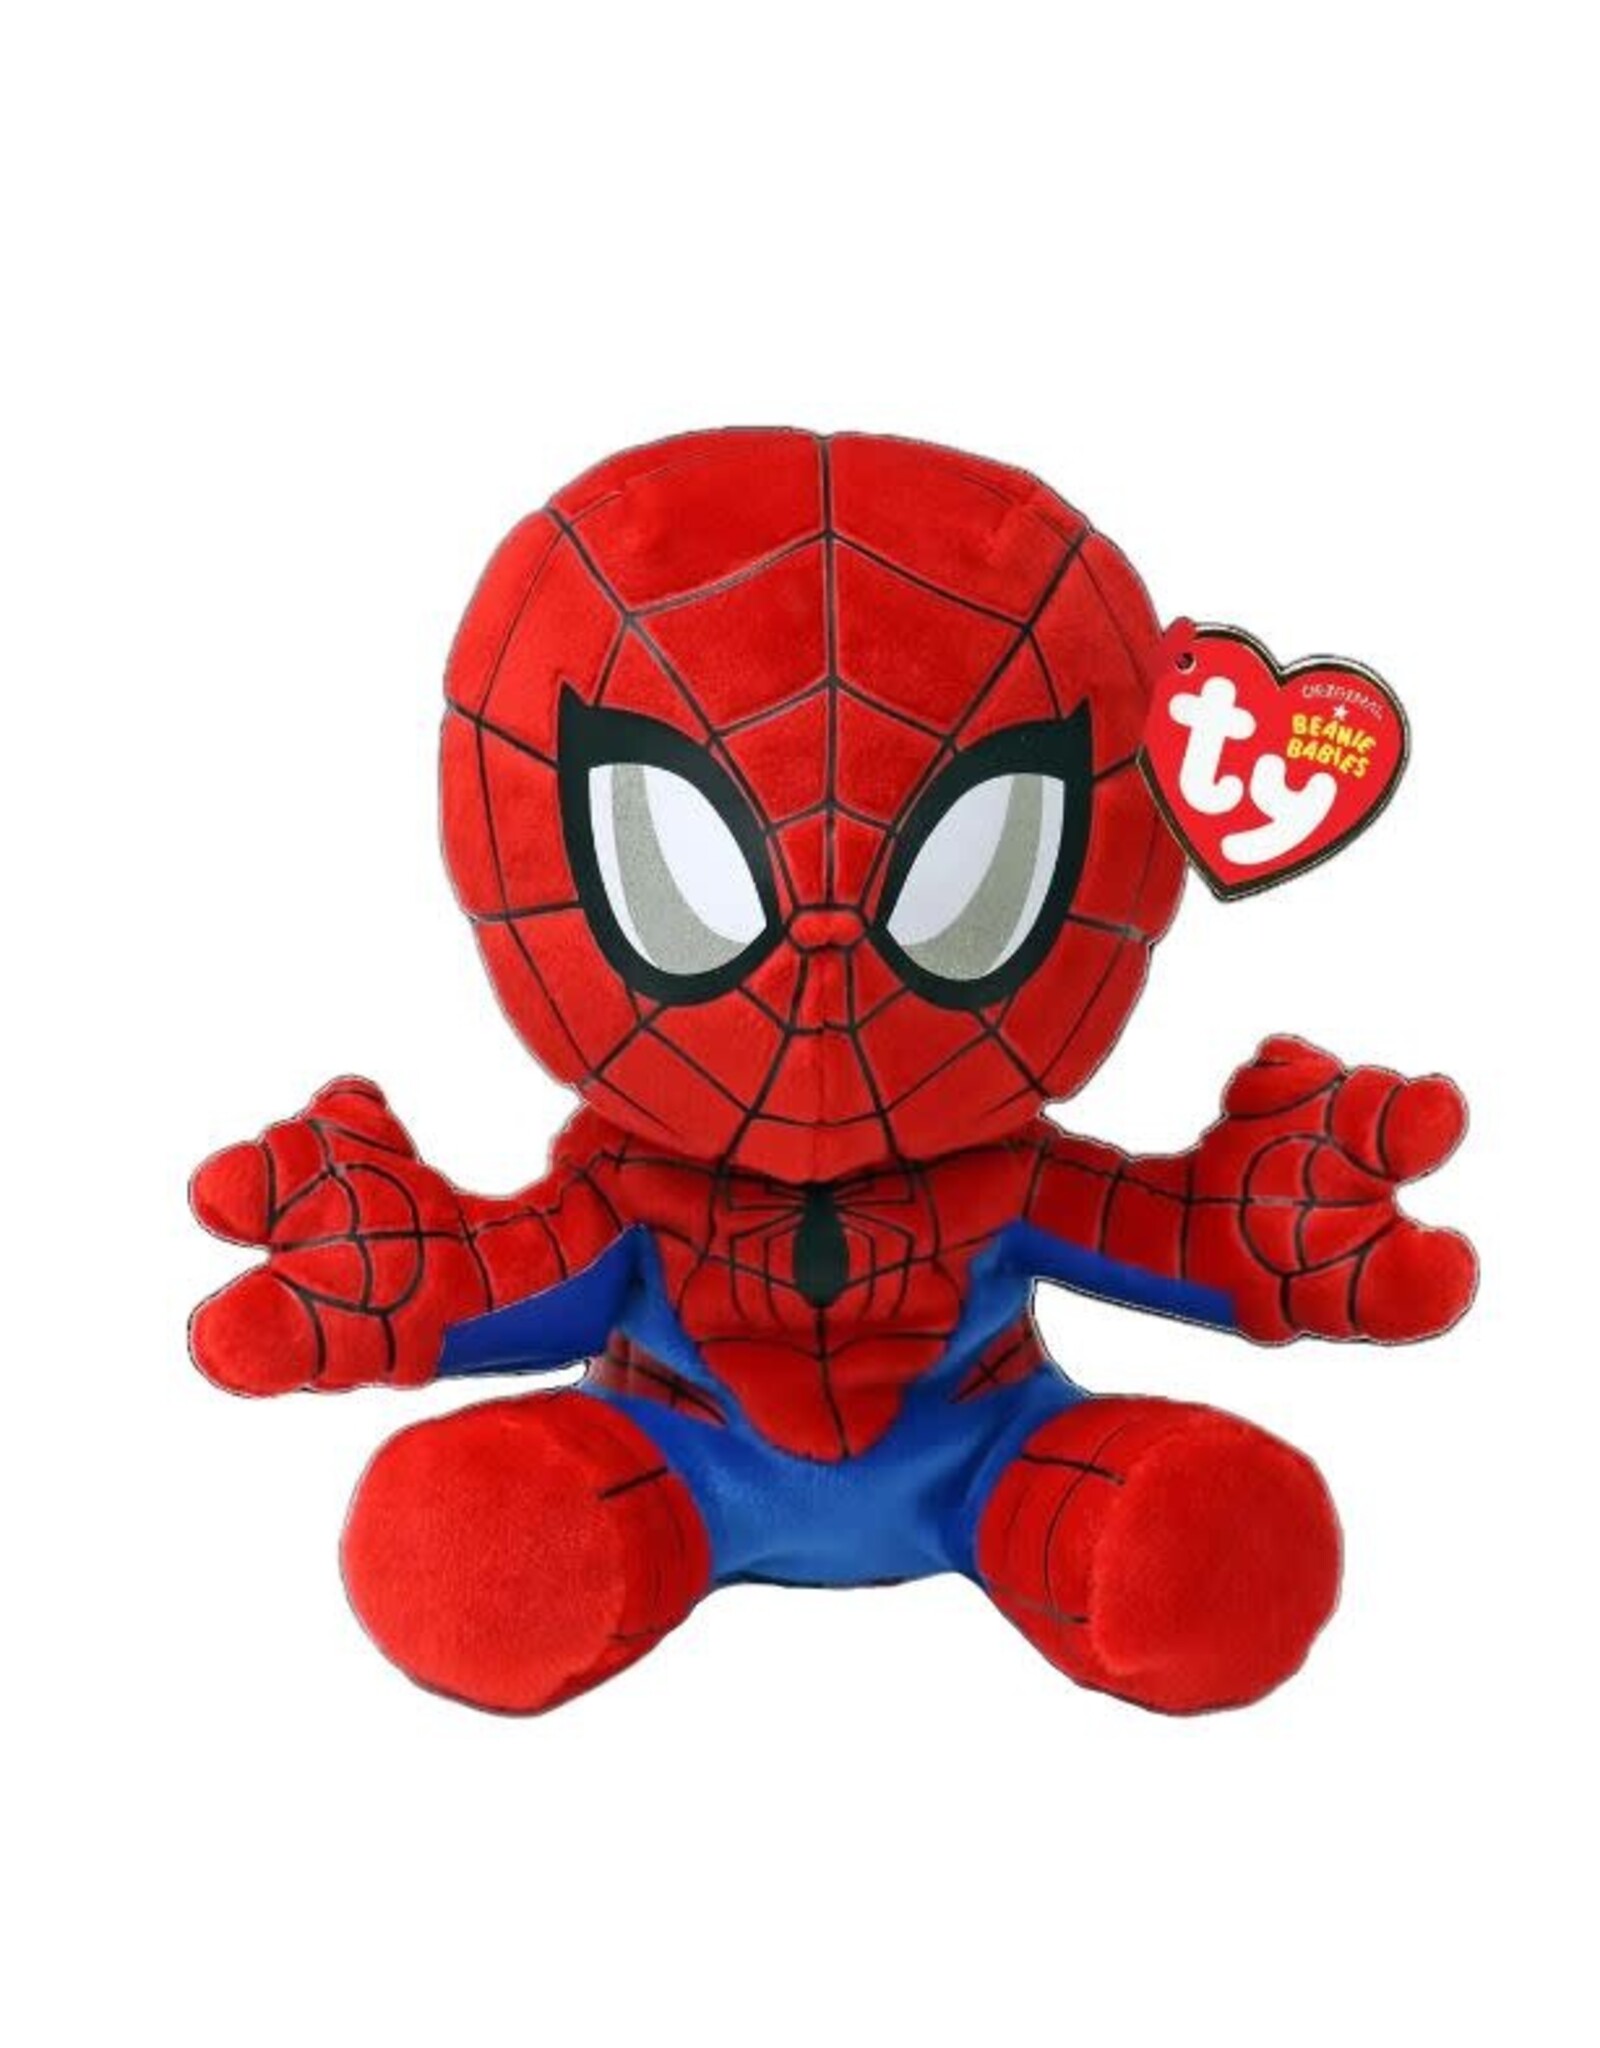 Ty Beanie Buddy - Spiderman Med